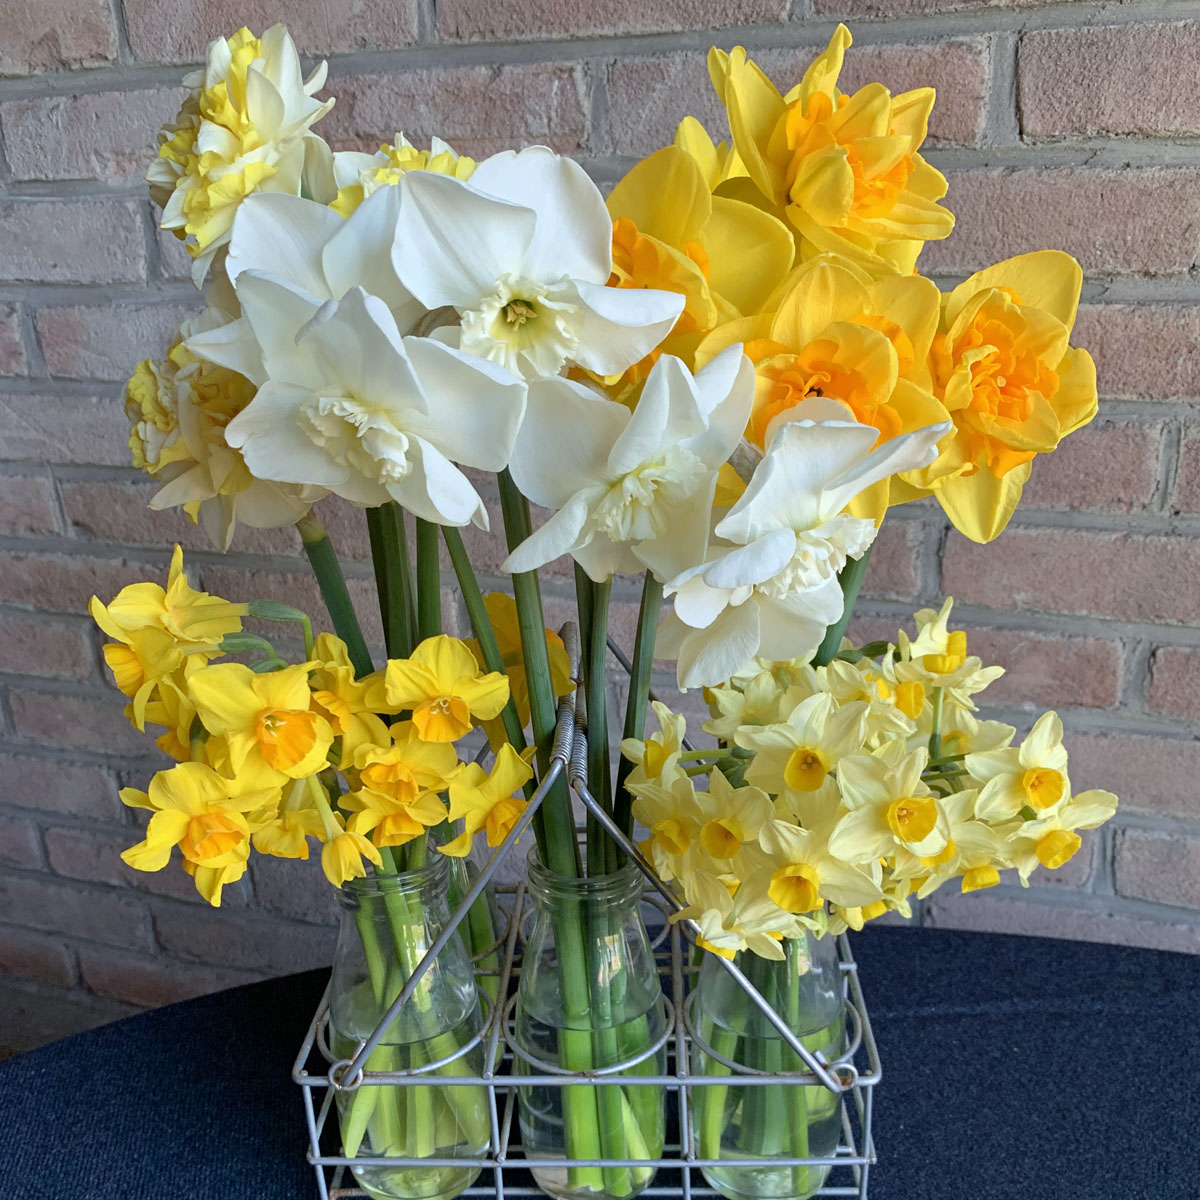 Einladung zur World Daffodil Tour